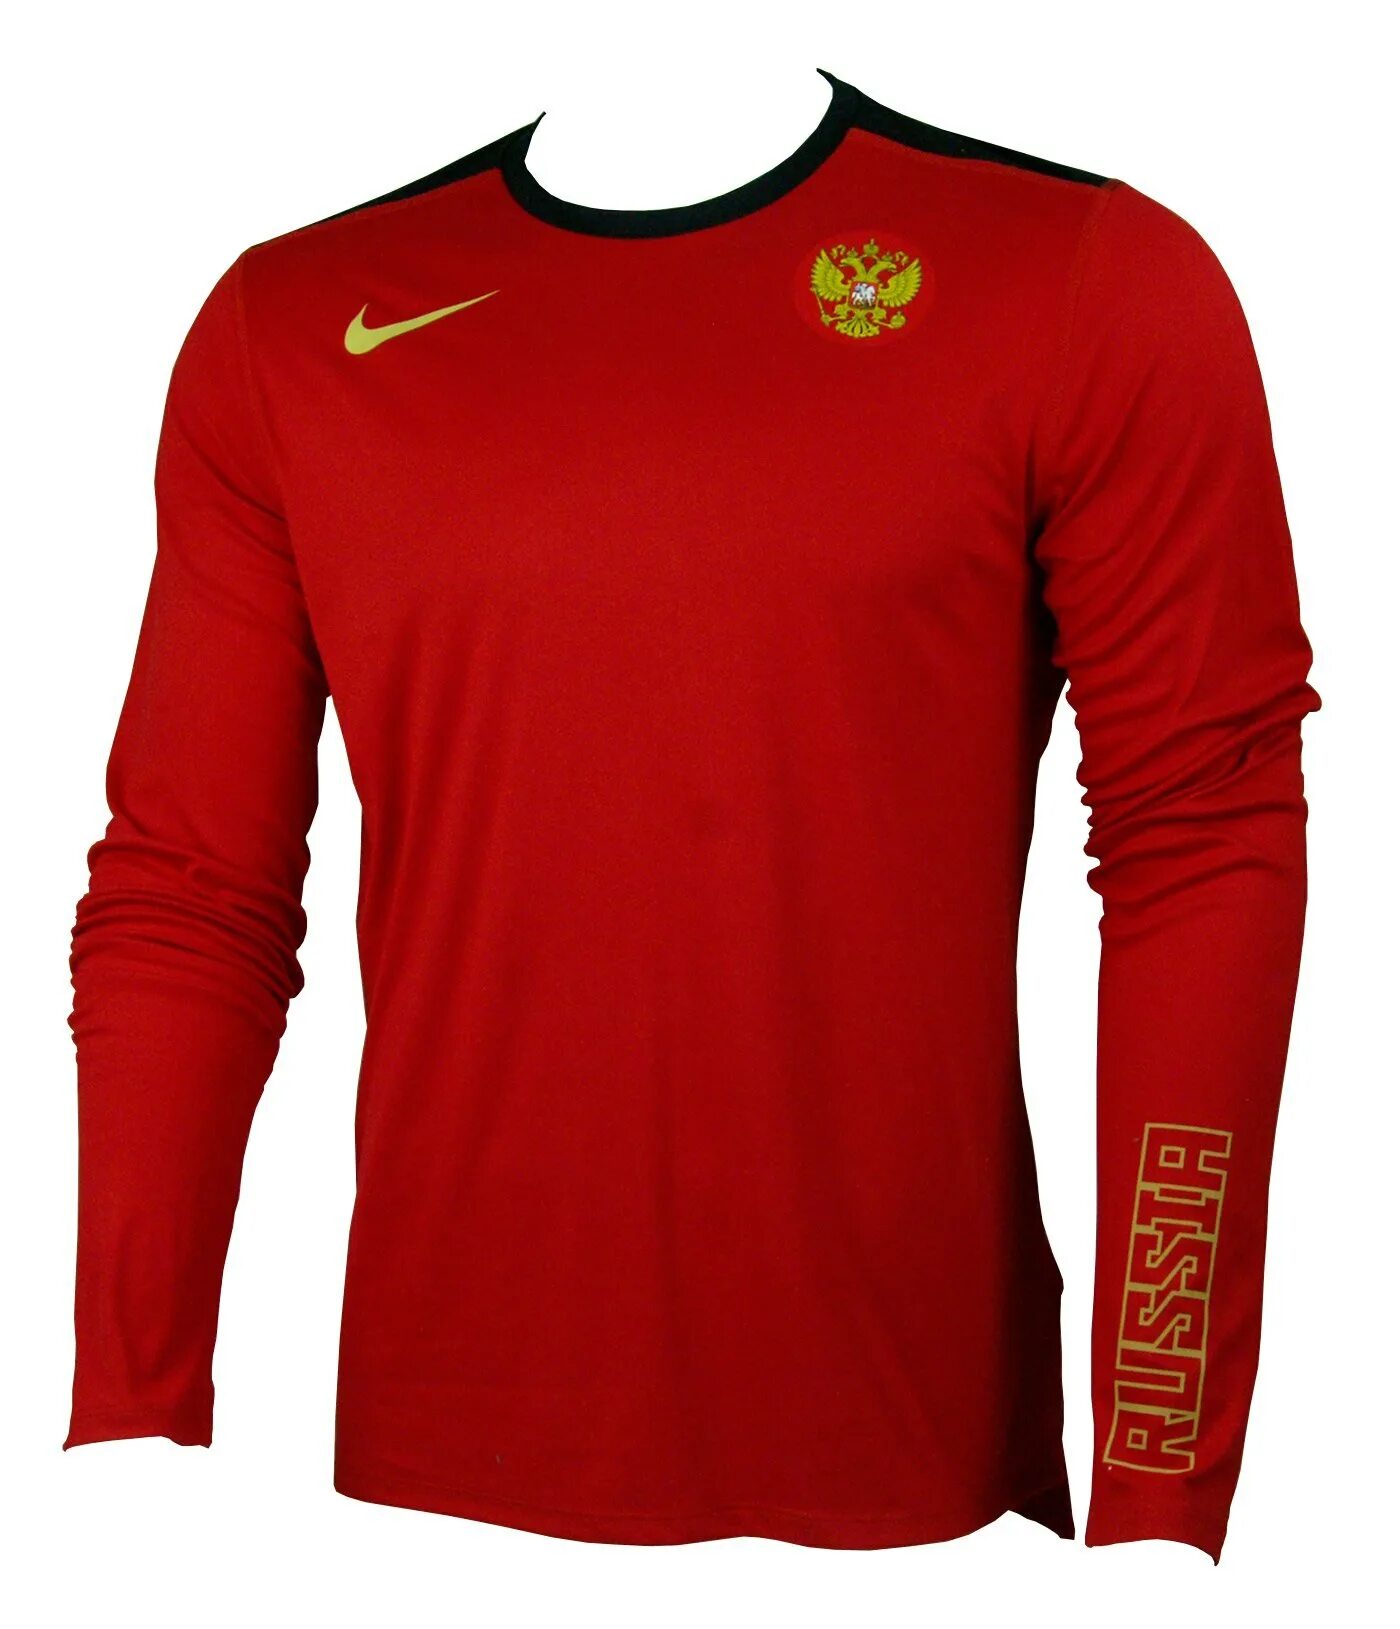 Кофта Nike Nike. Лонгслив Russia Nike. Nike Dri Fit кофта красная. Боксерская кофта Nike Russia.